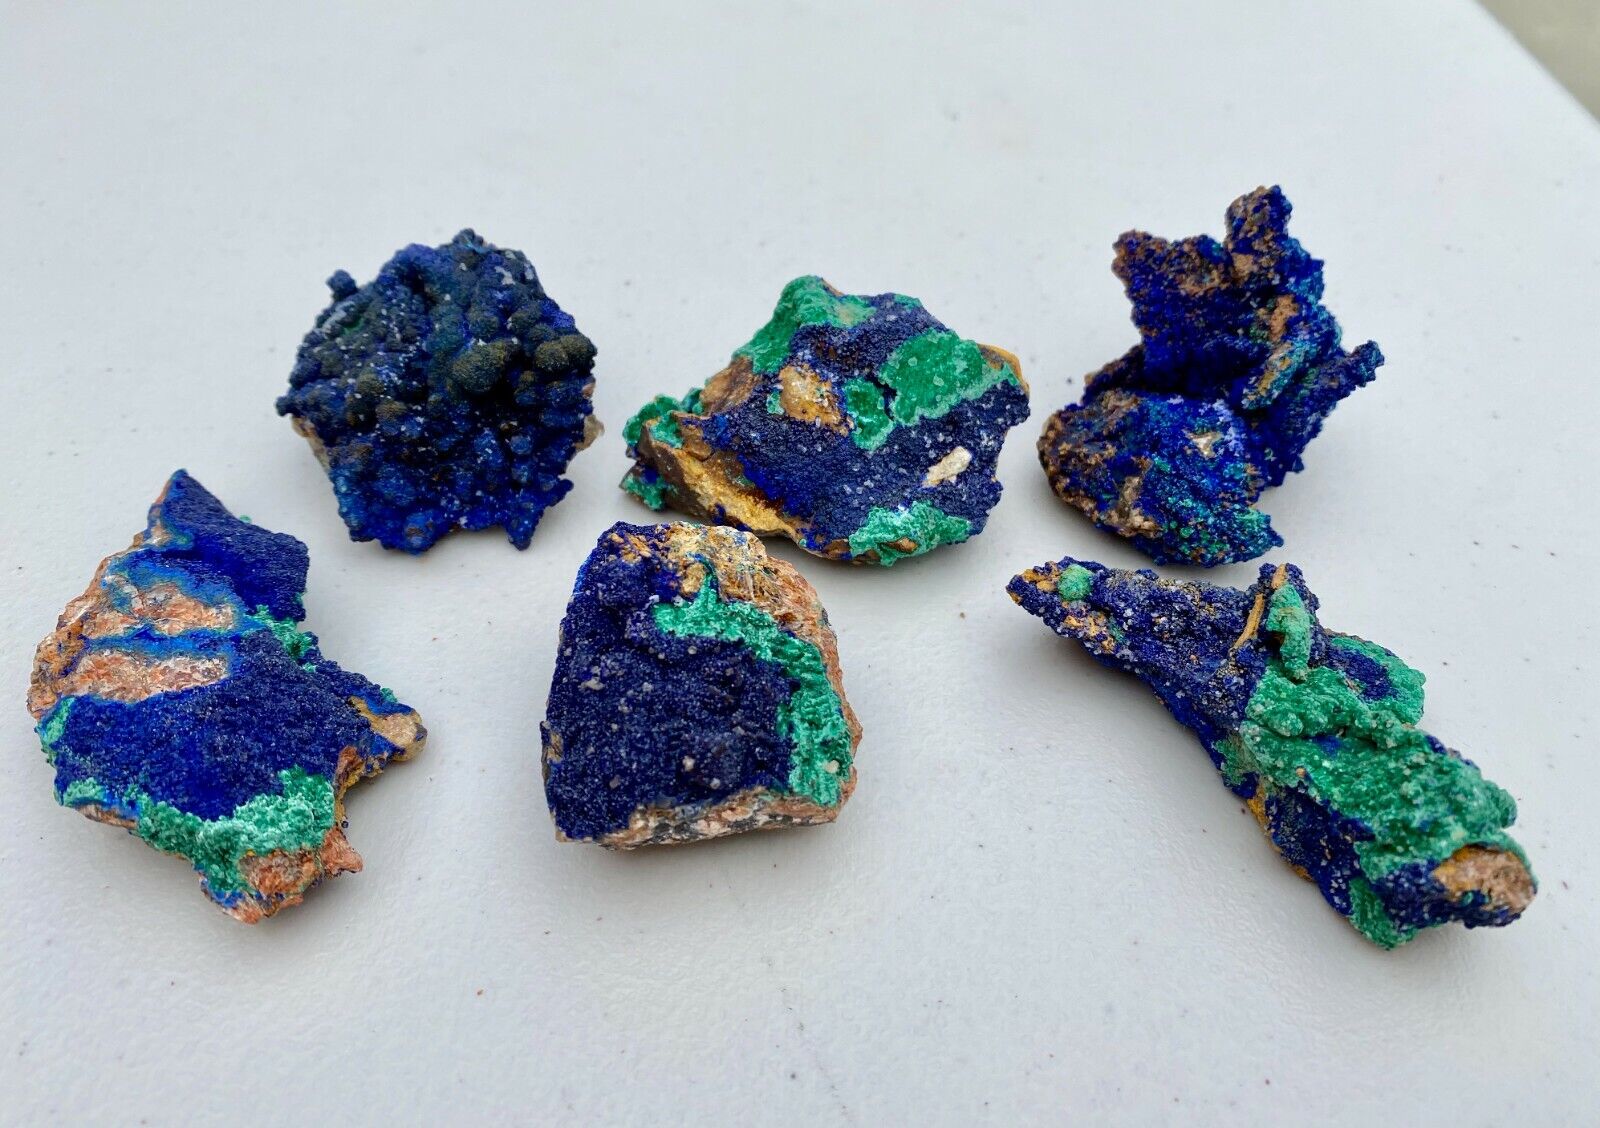 AAA grade Natural Medium Azurite Malachite Crystals with Druzy Matrix Specimen